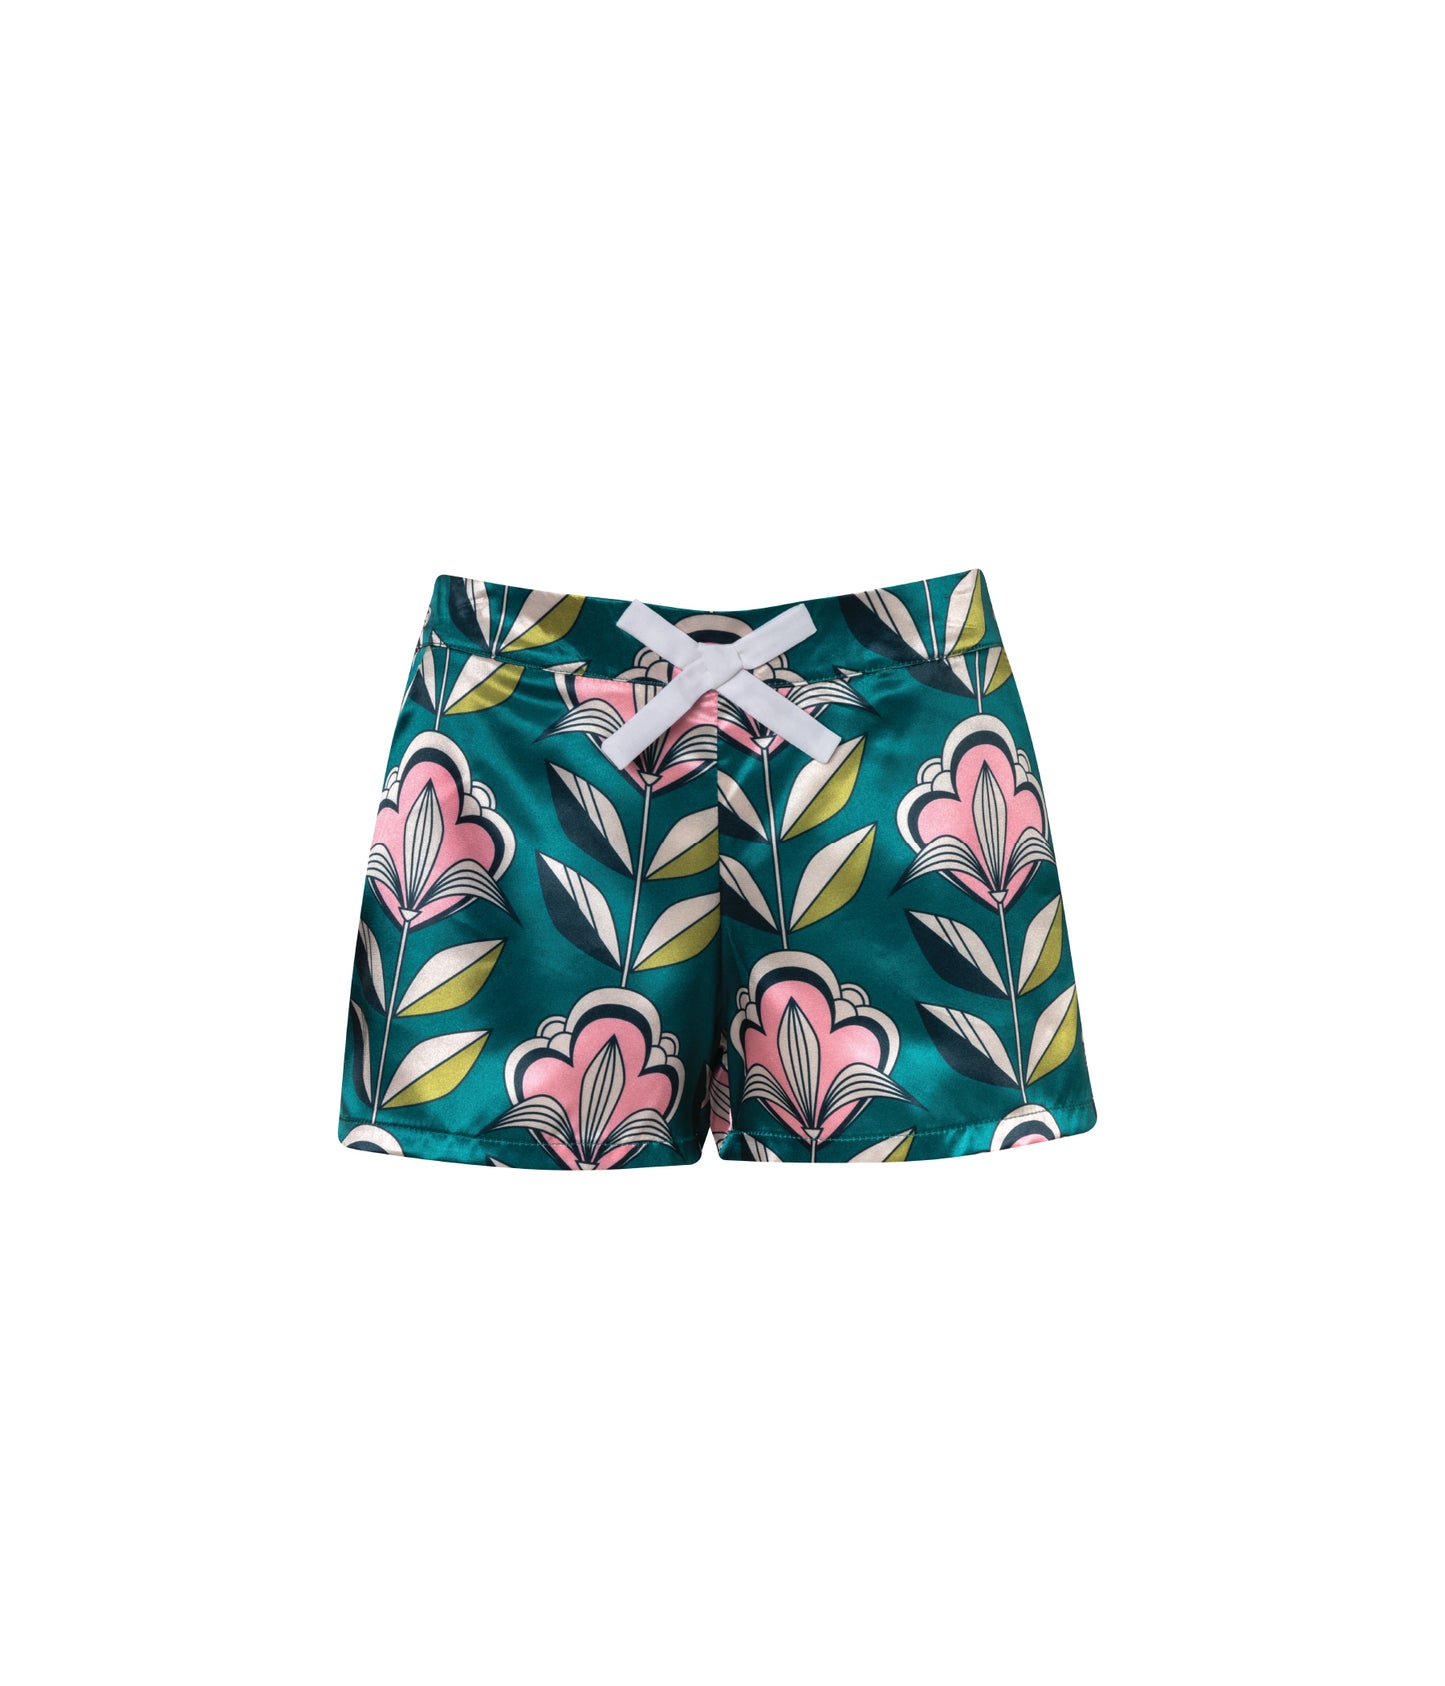 Verdelimon - Shorts - Santorini - Printed - Flowers - Front